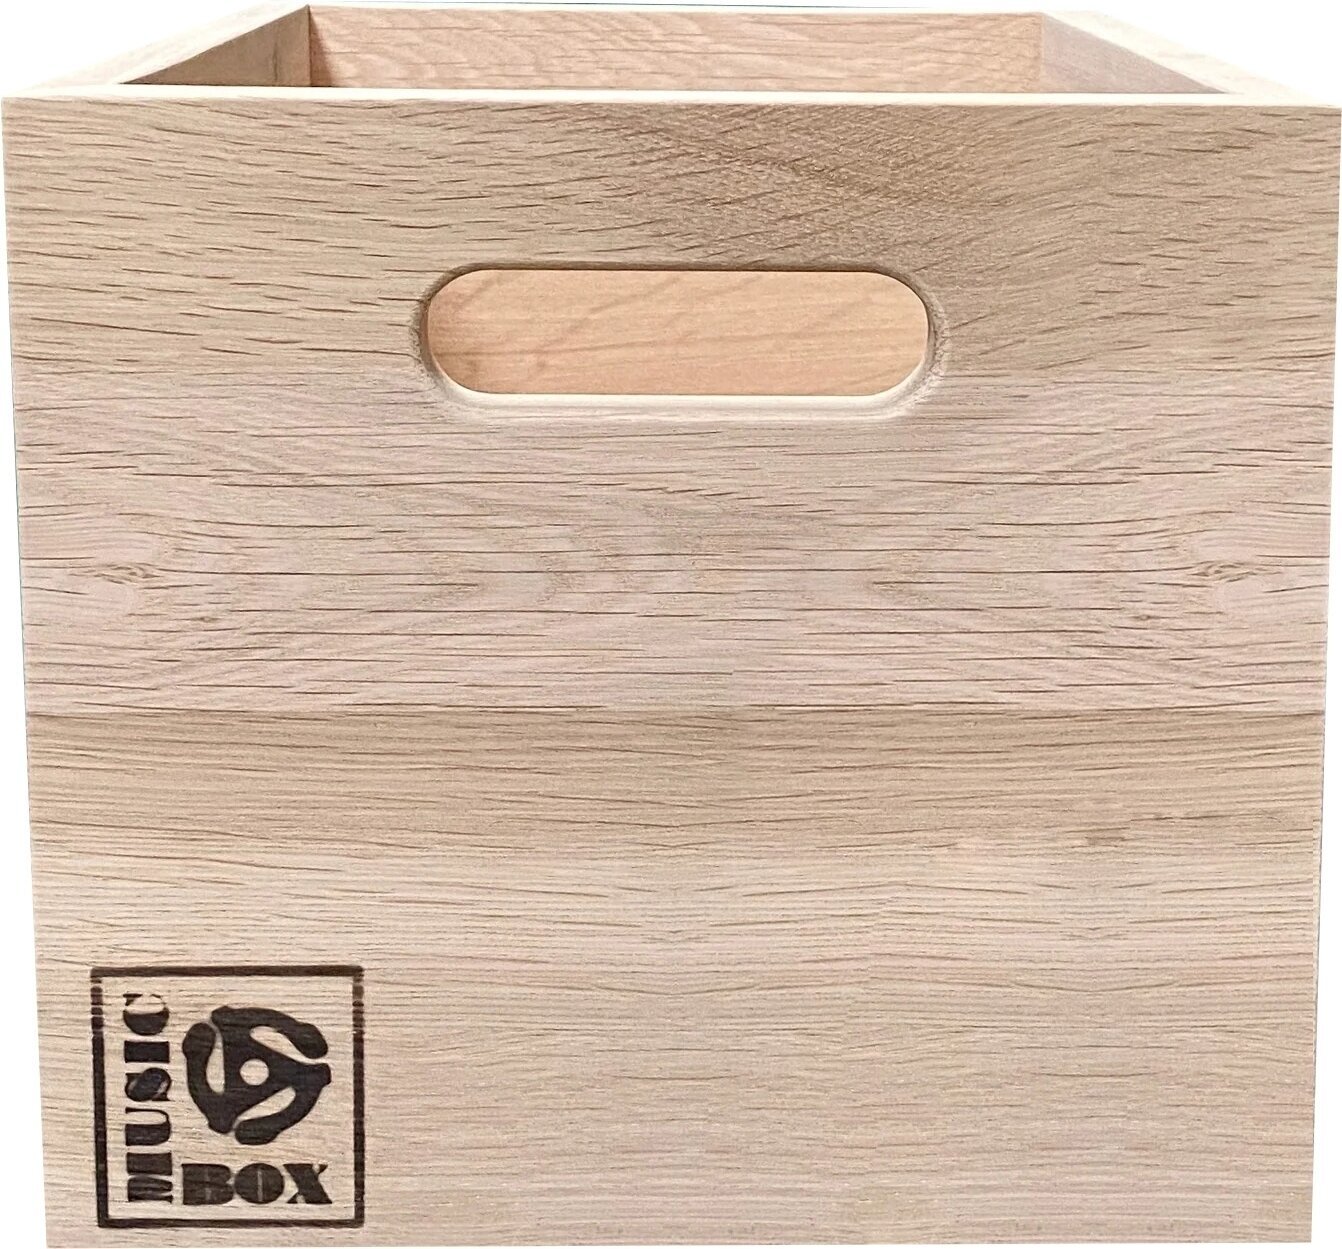 Caixa de discos de vinil Music Box Designs 7 inch Vinyl Storage Box- ‘Singles Going Steady' Natural Oak Caixa Caixa de discos de vinil